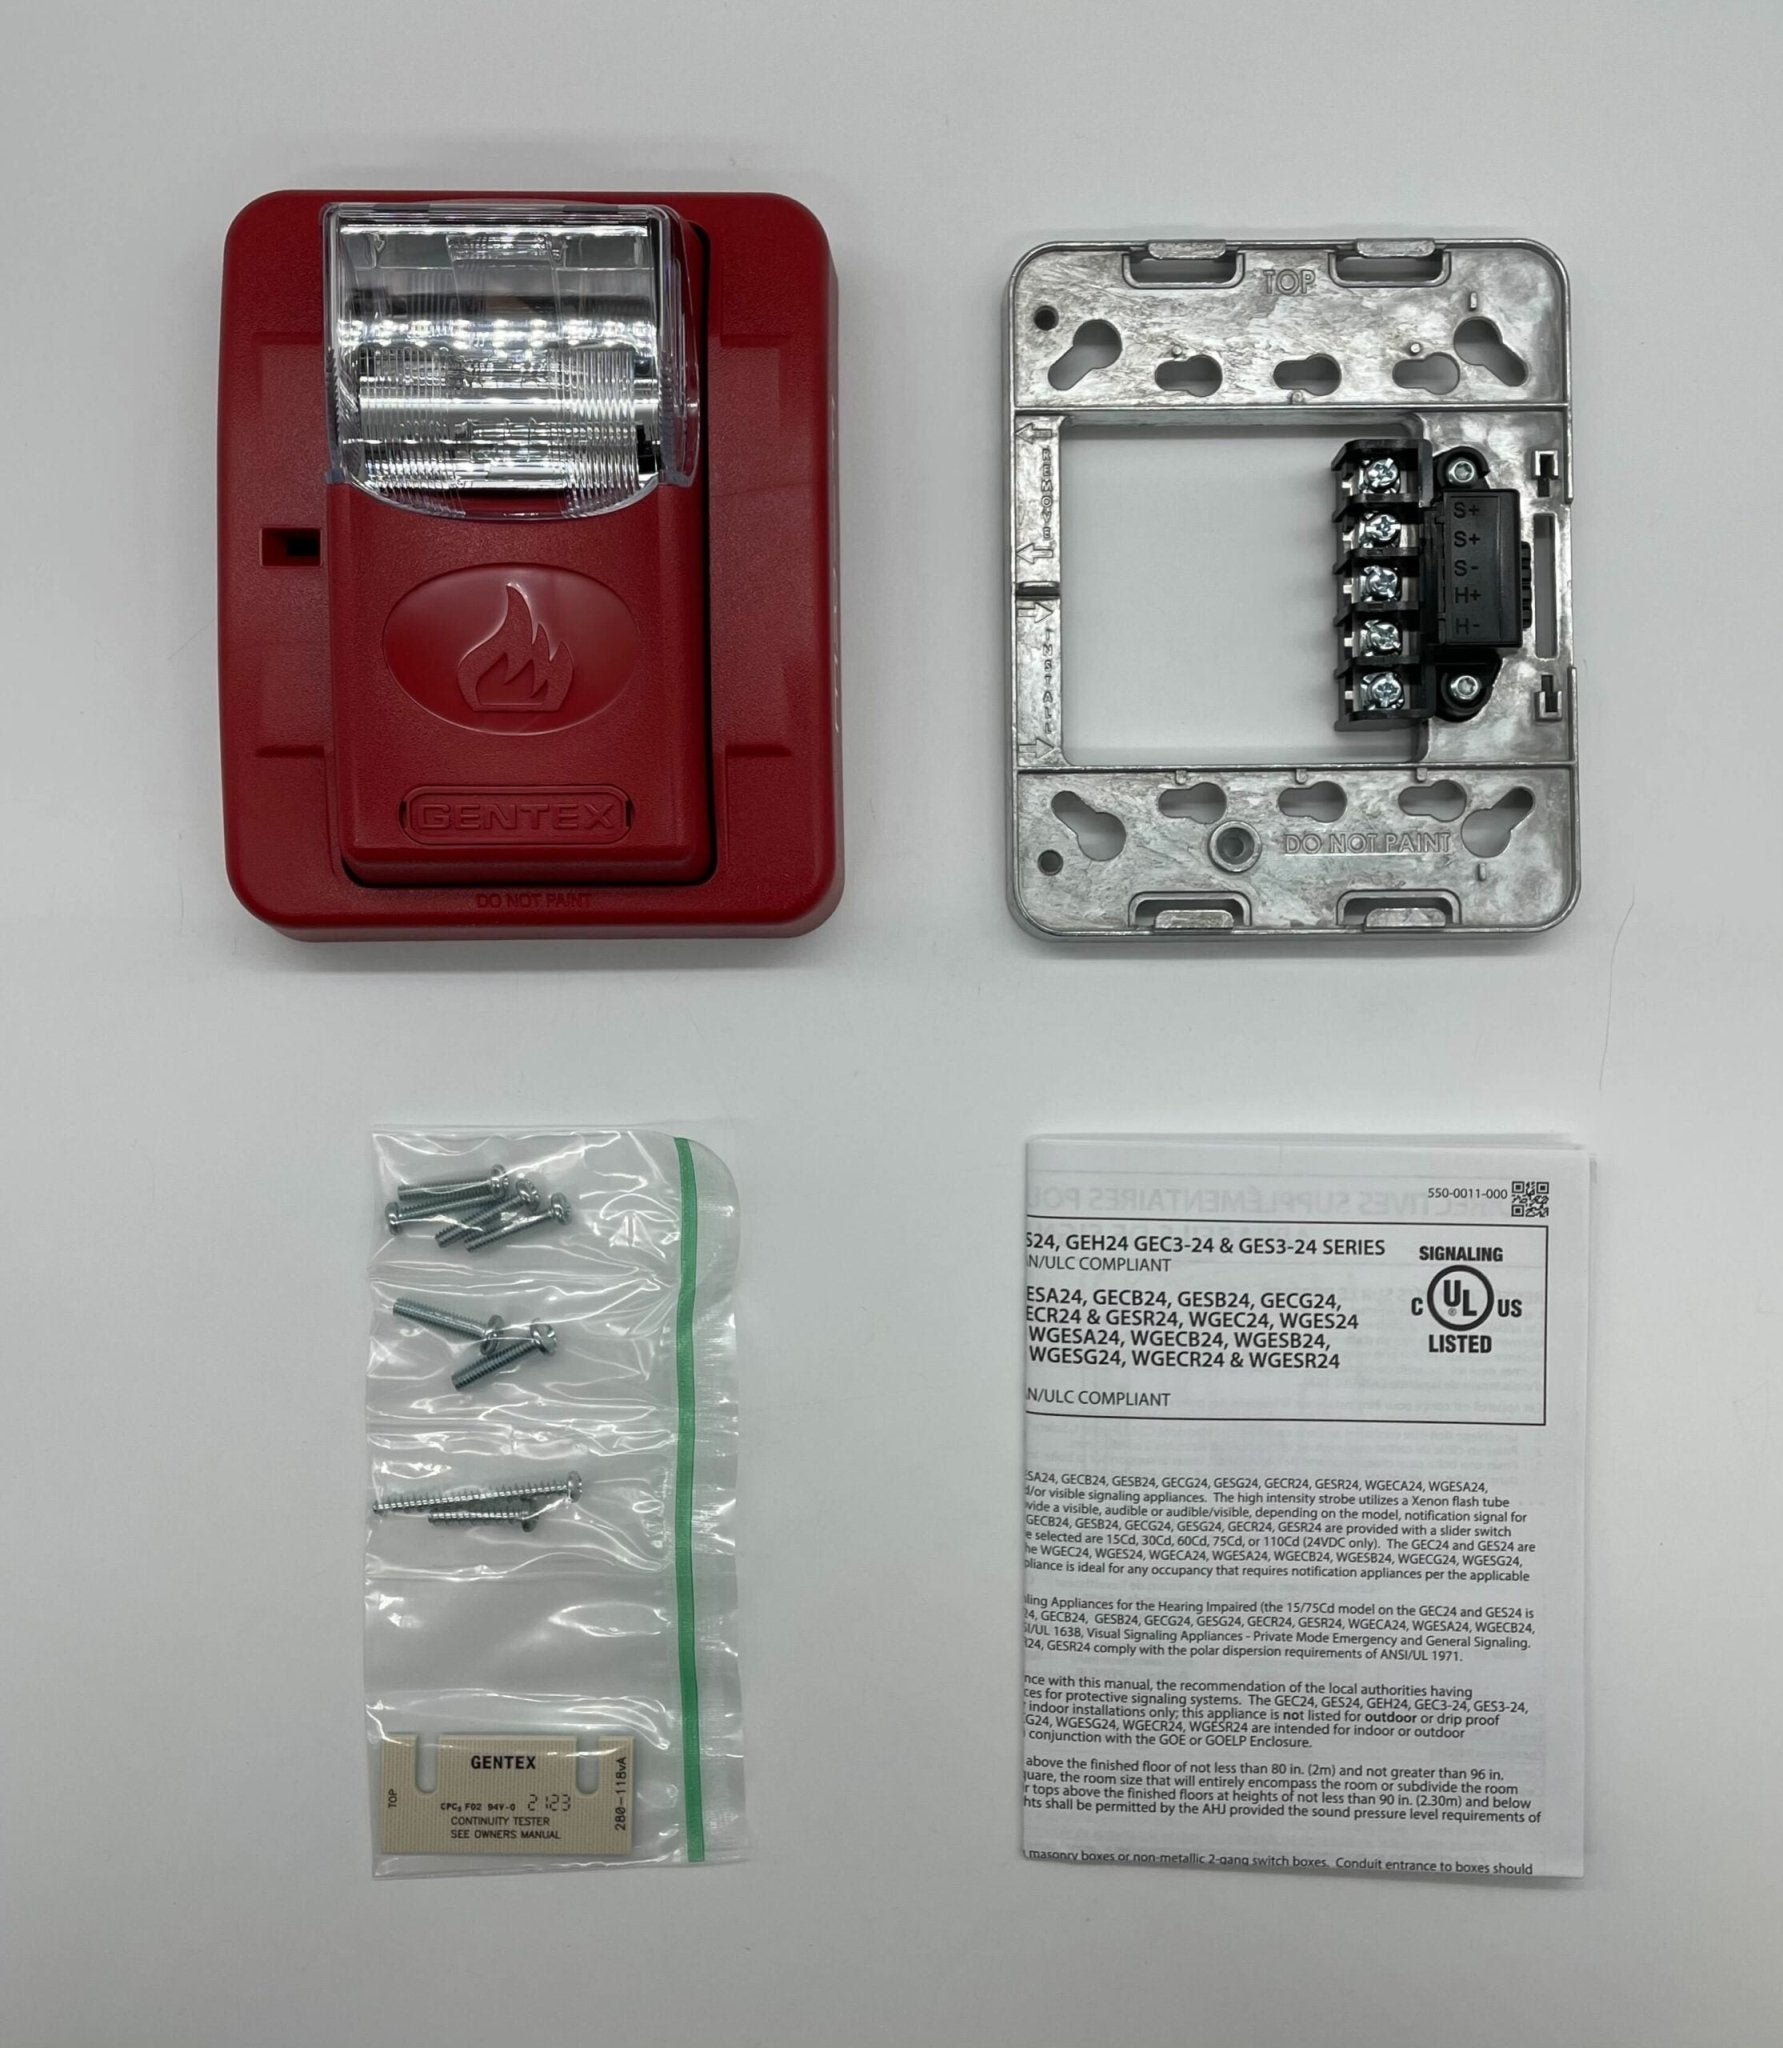 Gentex GES3-24WR - The Fire Alarm Supplier